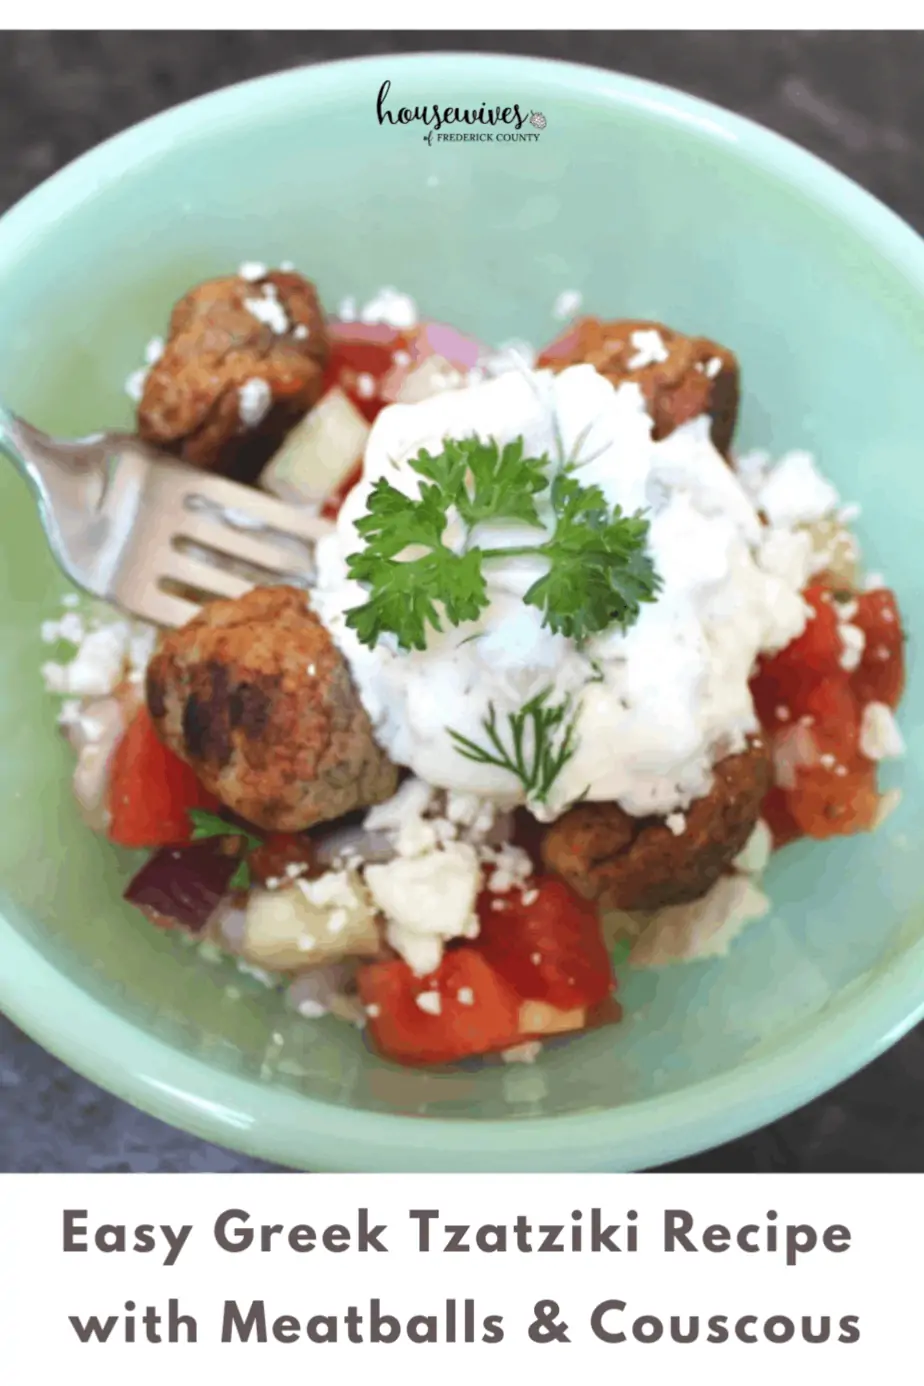 Easy Greek Tzatziki Recipe with Meatballs & Couscous